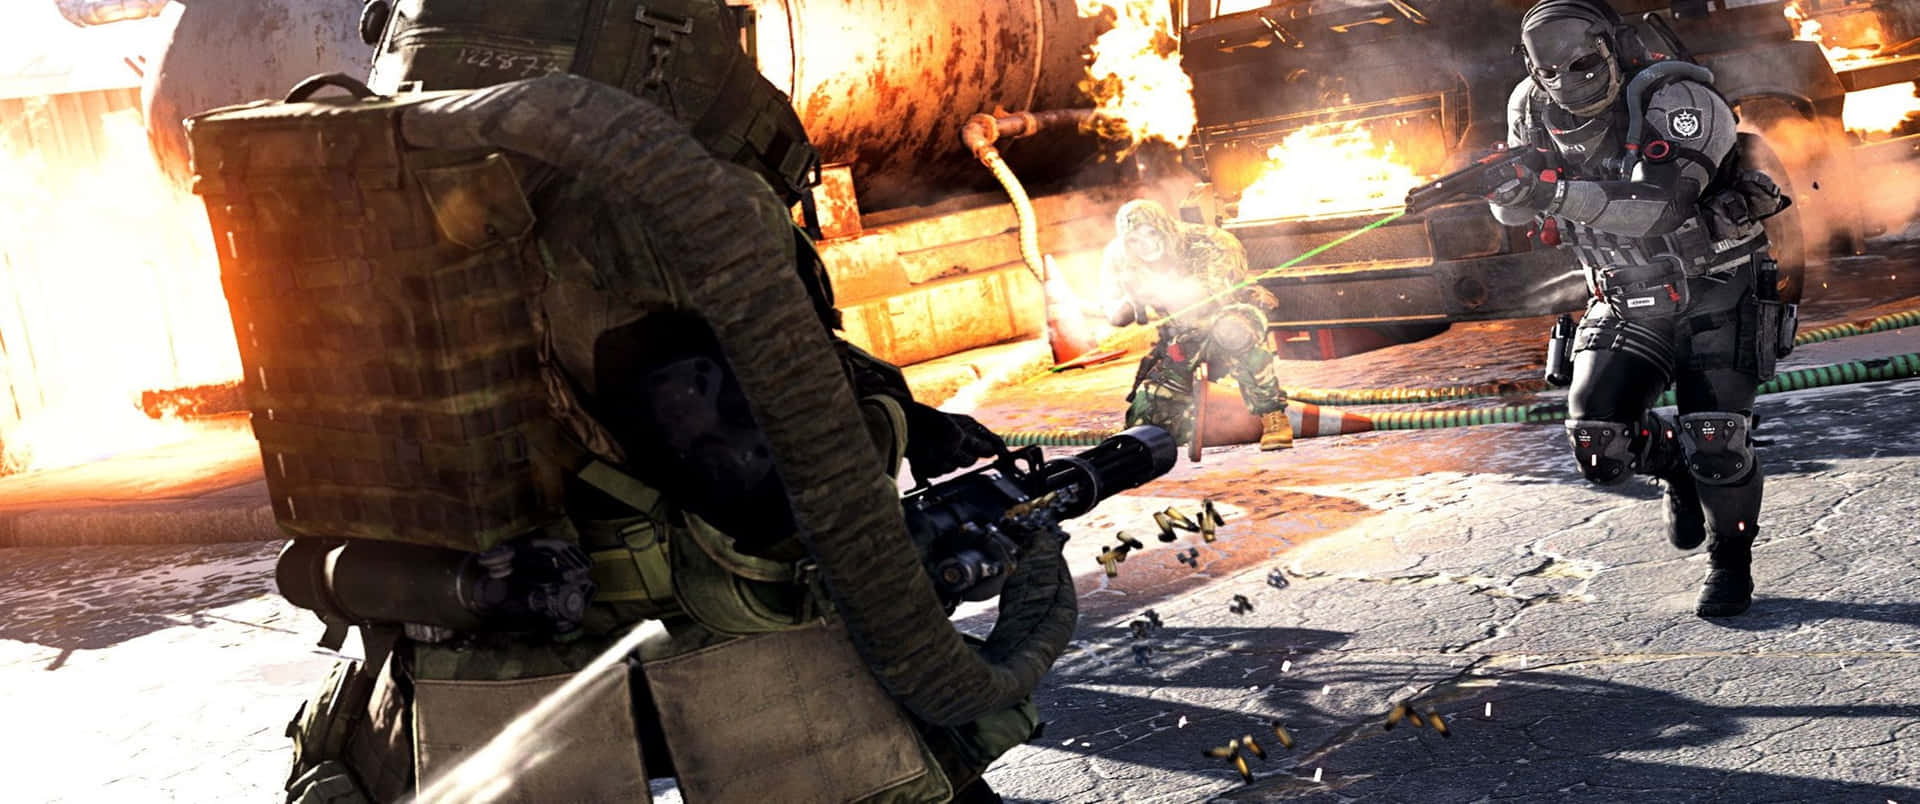 3440x1440pcall Of Duty Black Ops Cold War Juggernaut Bakgrund.